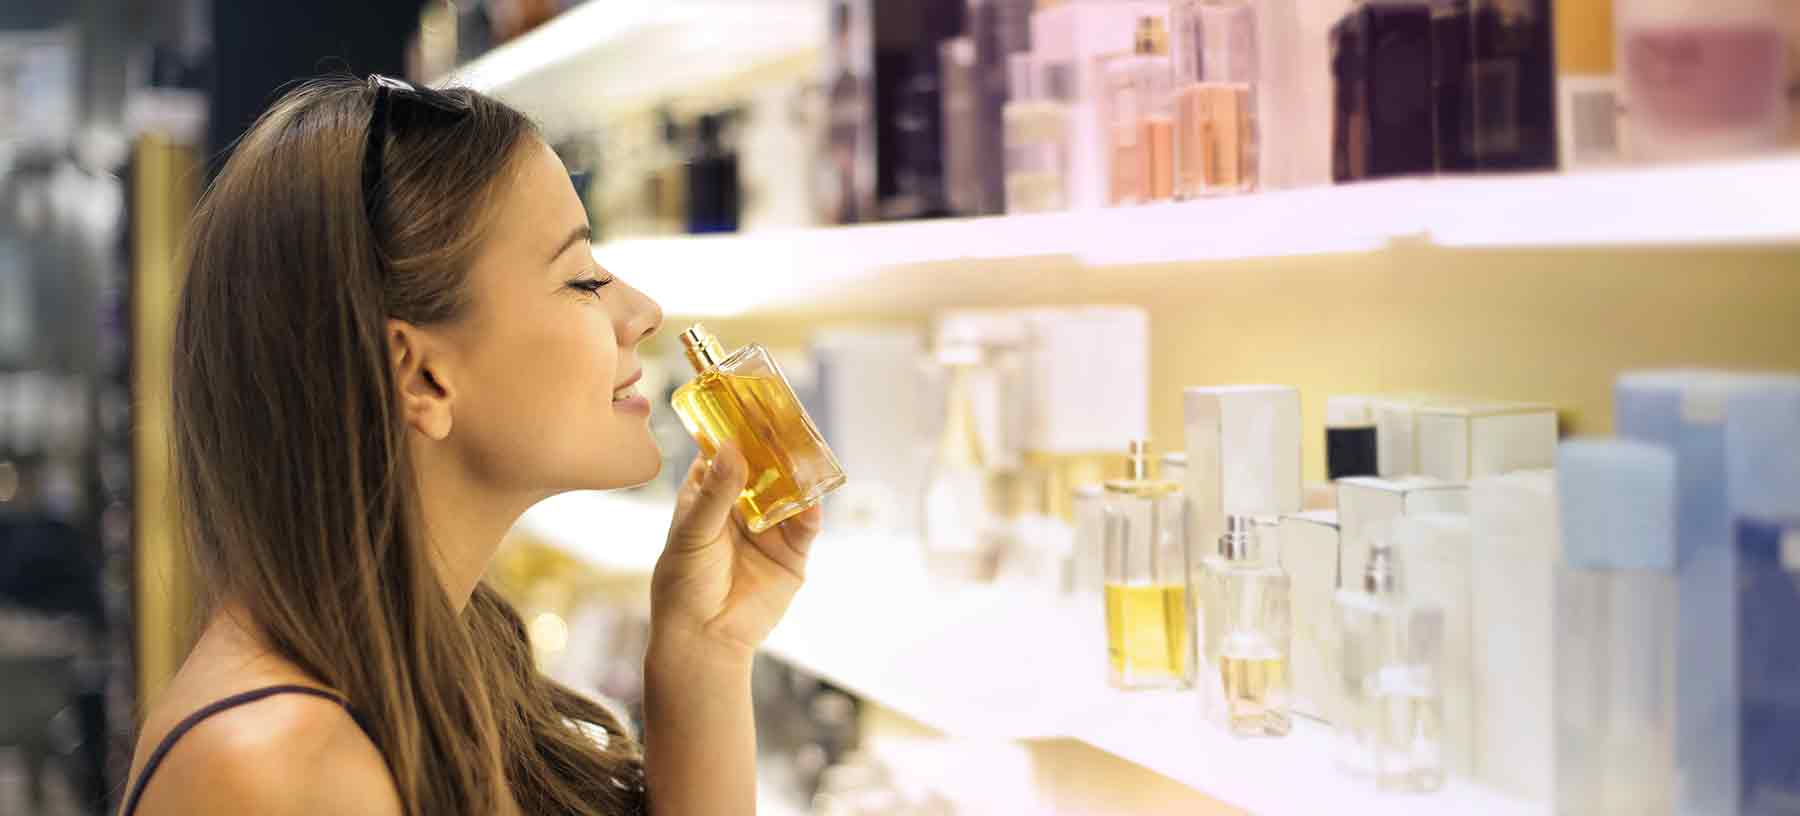 chanel gabrielle perfume review